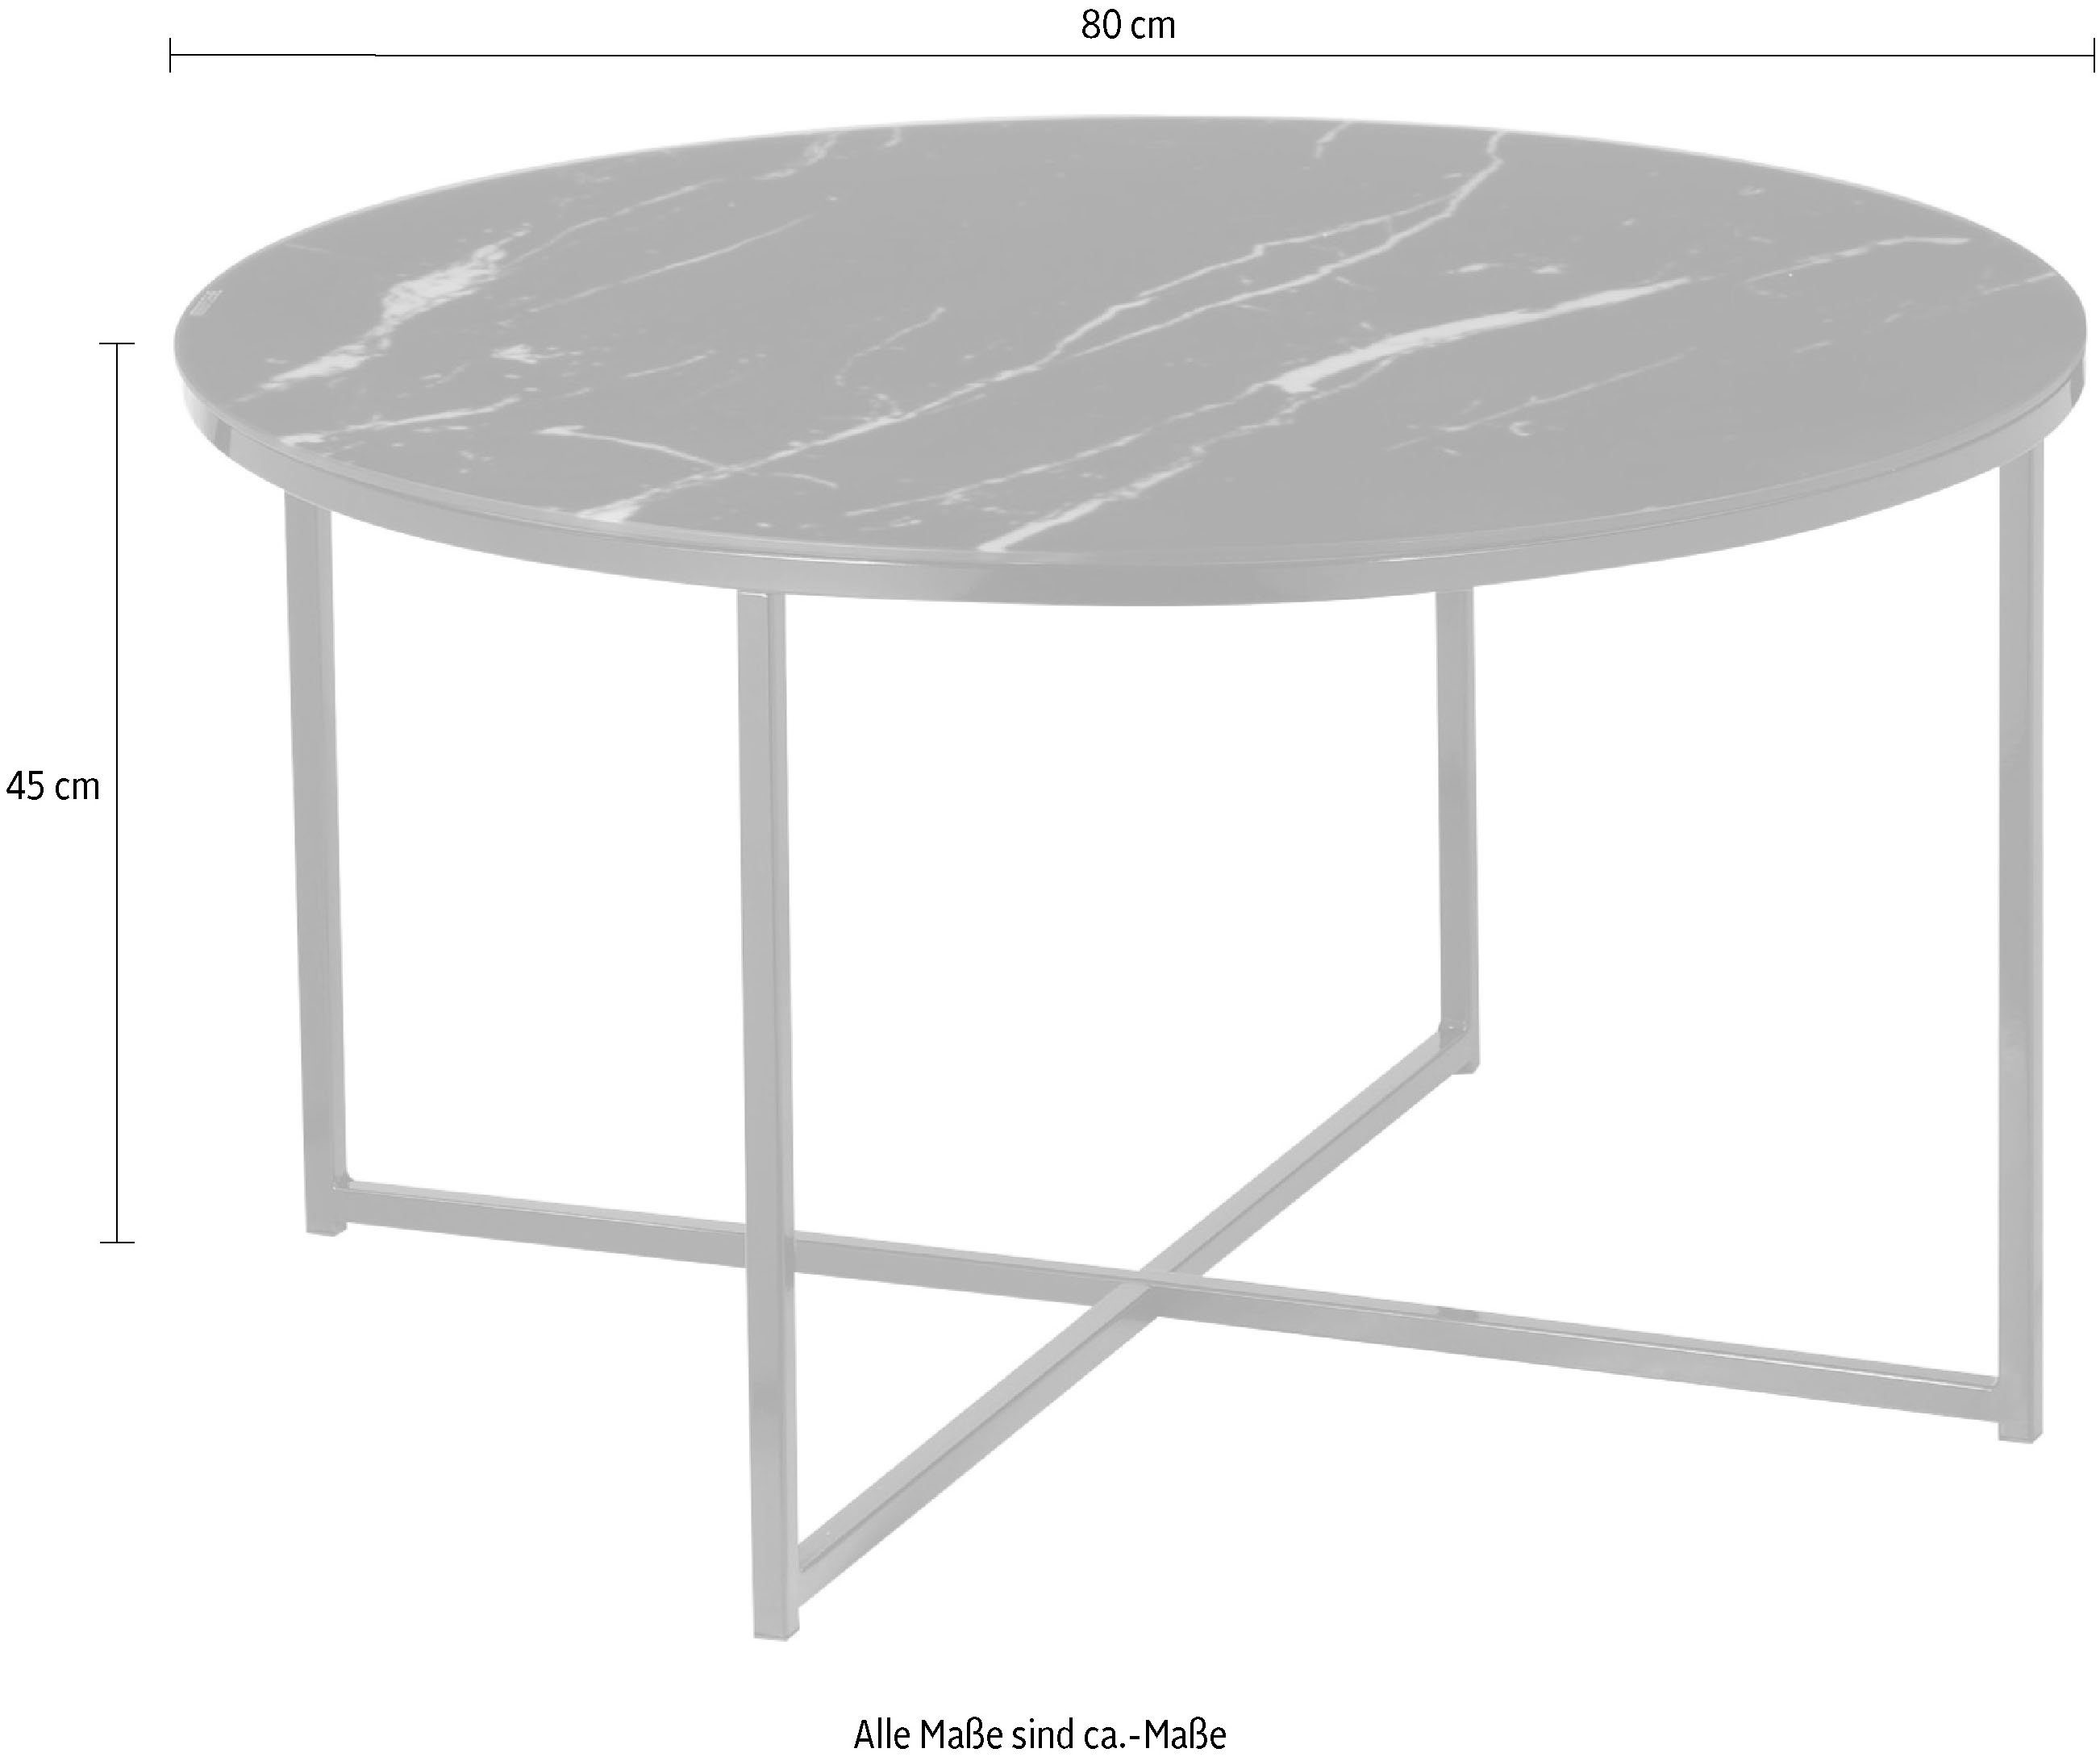 SalesFever Couchtisch, Tischplatte in Schwarz Marmoroptik | Schwarz/schwarz Schwarz 